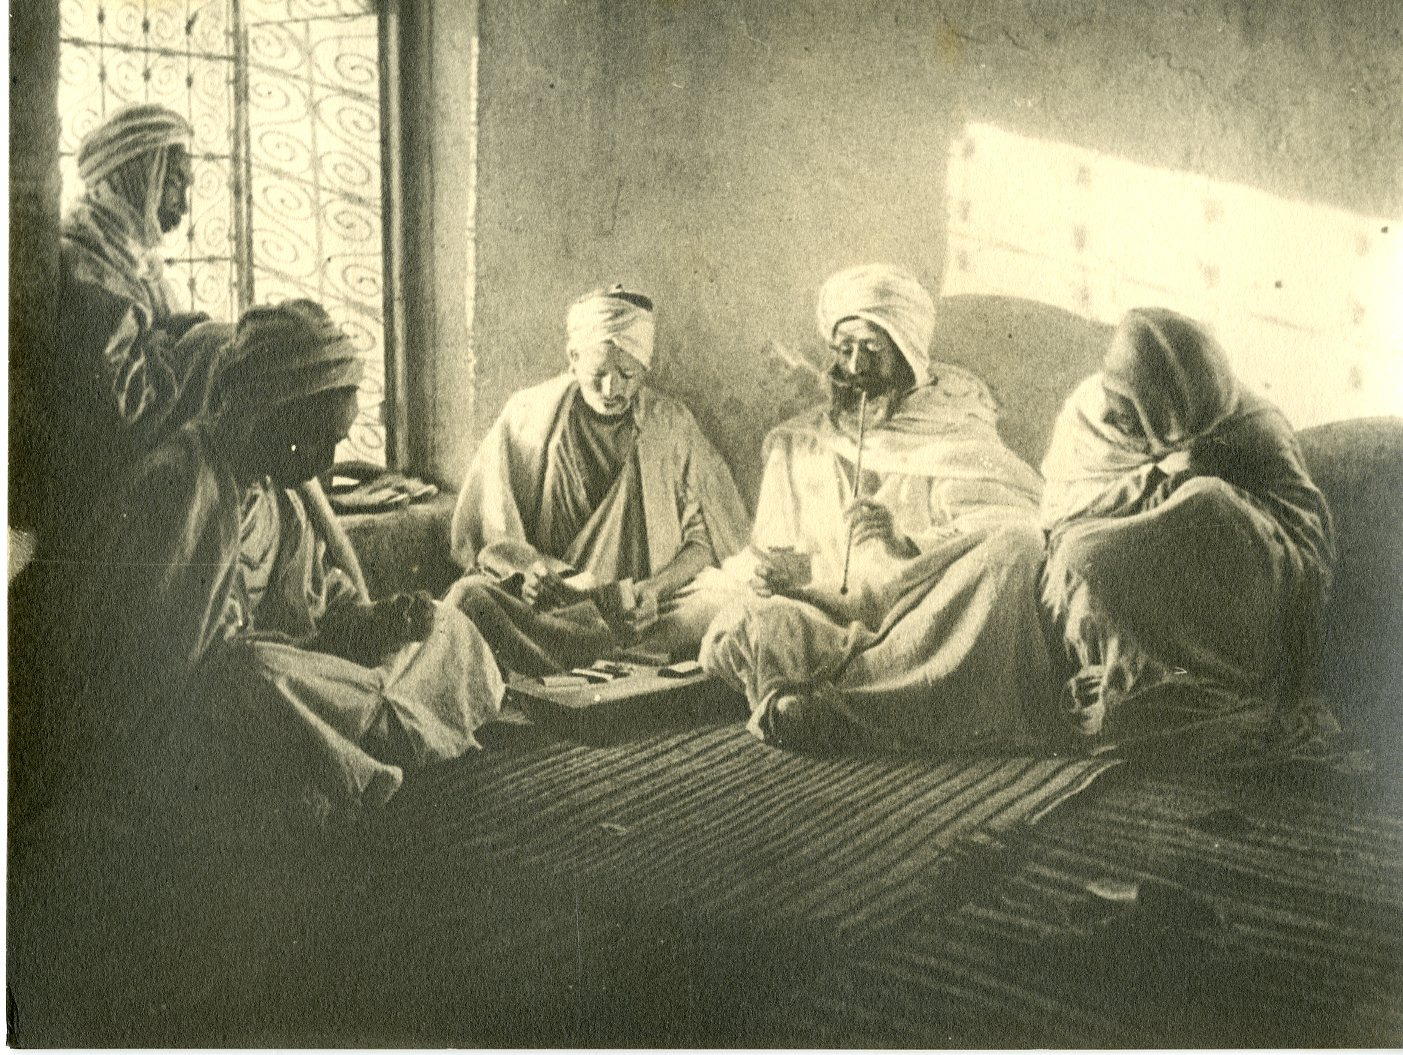 Tunisia, vintage silver print, coffee break between men later 1930